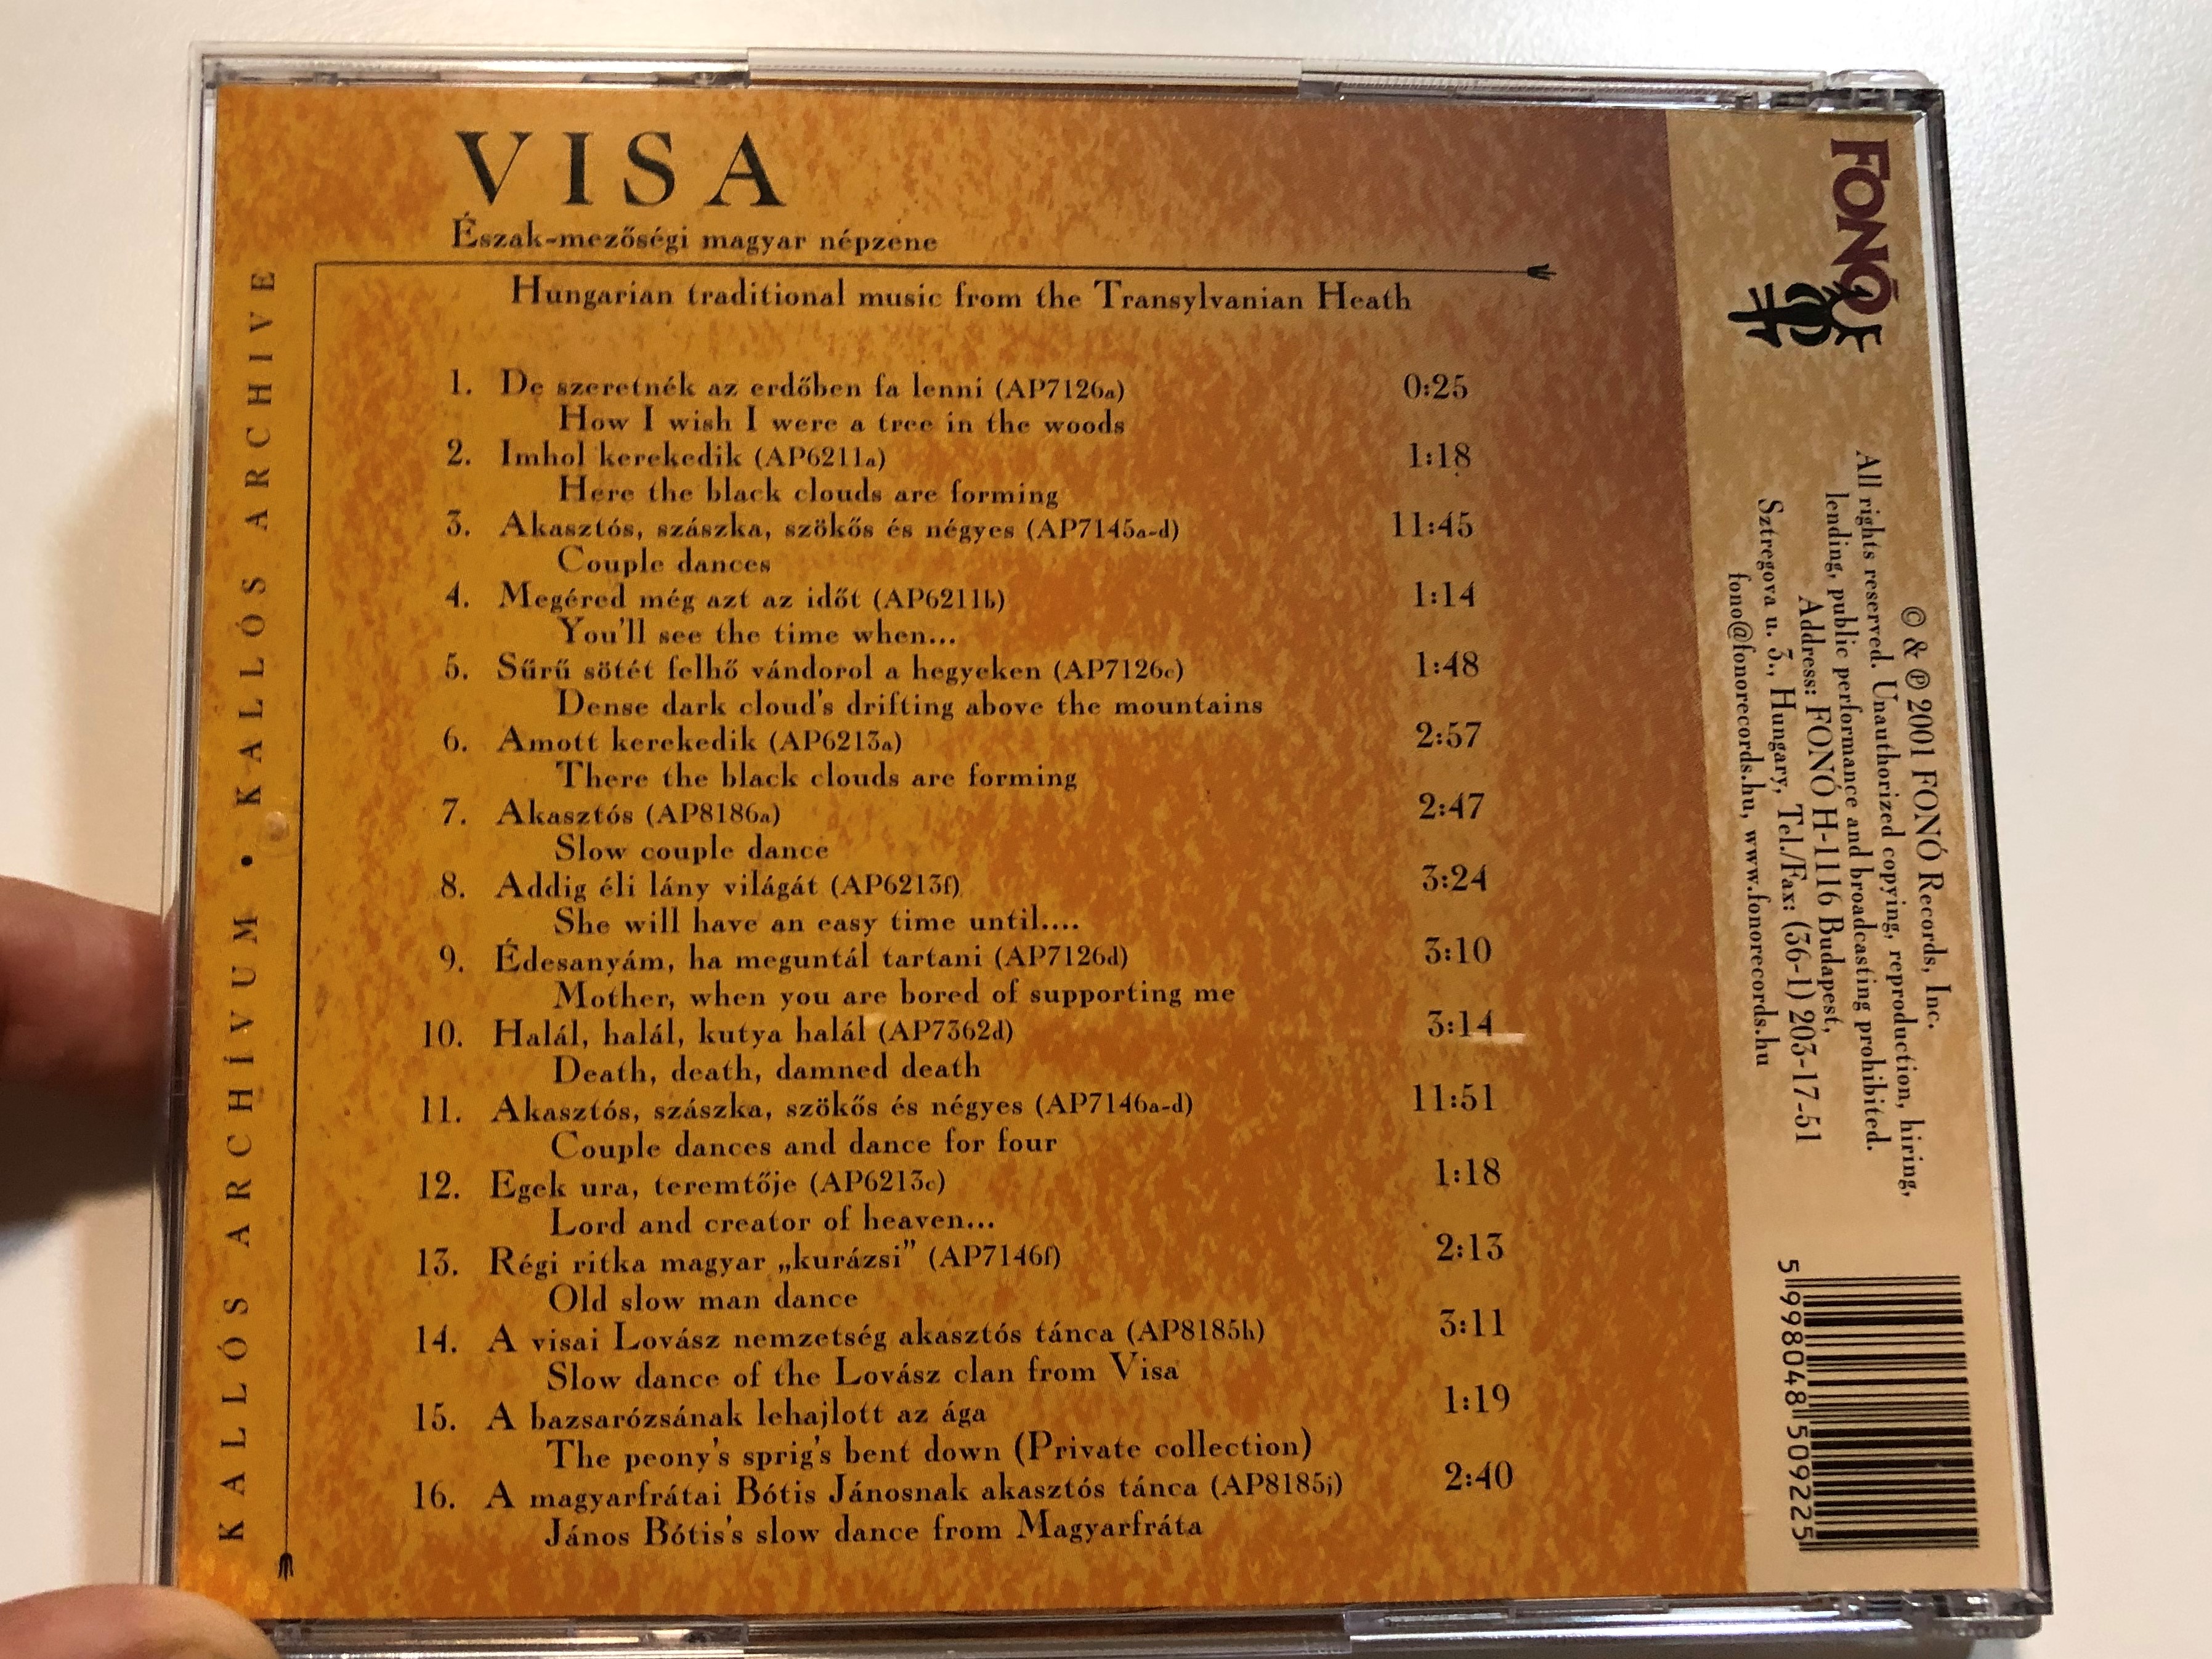 visa-szak-mez-s-gi-magyar-n-pzene-hungarian-traditional-music-from-the-transylvanian-heath-fon-records-audio-cd-2001-fa-092-2-8-.jpg